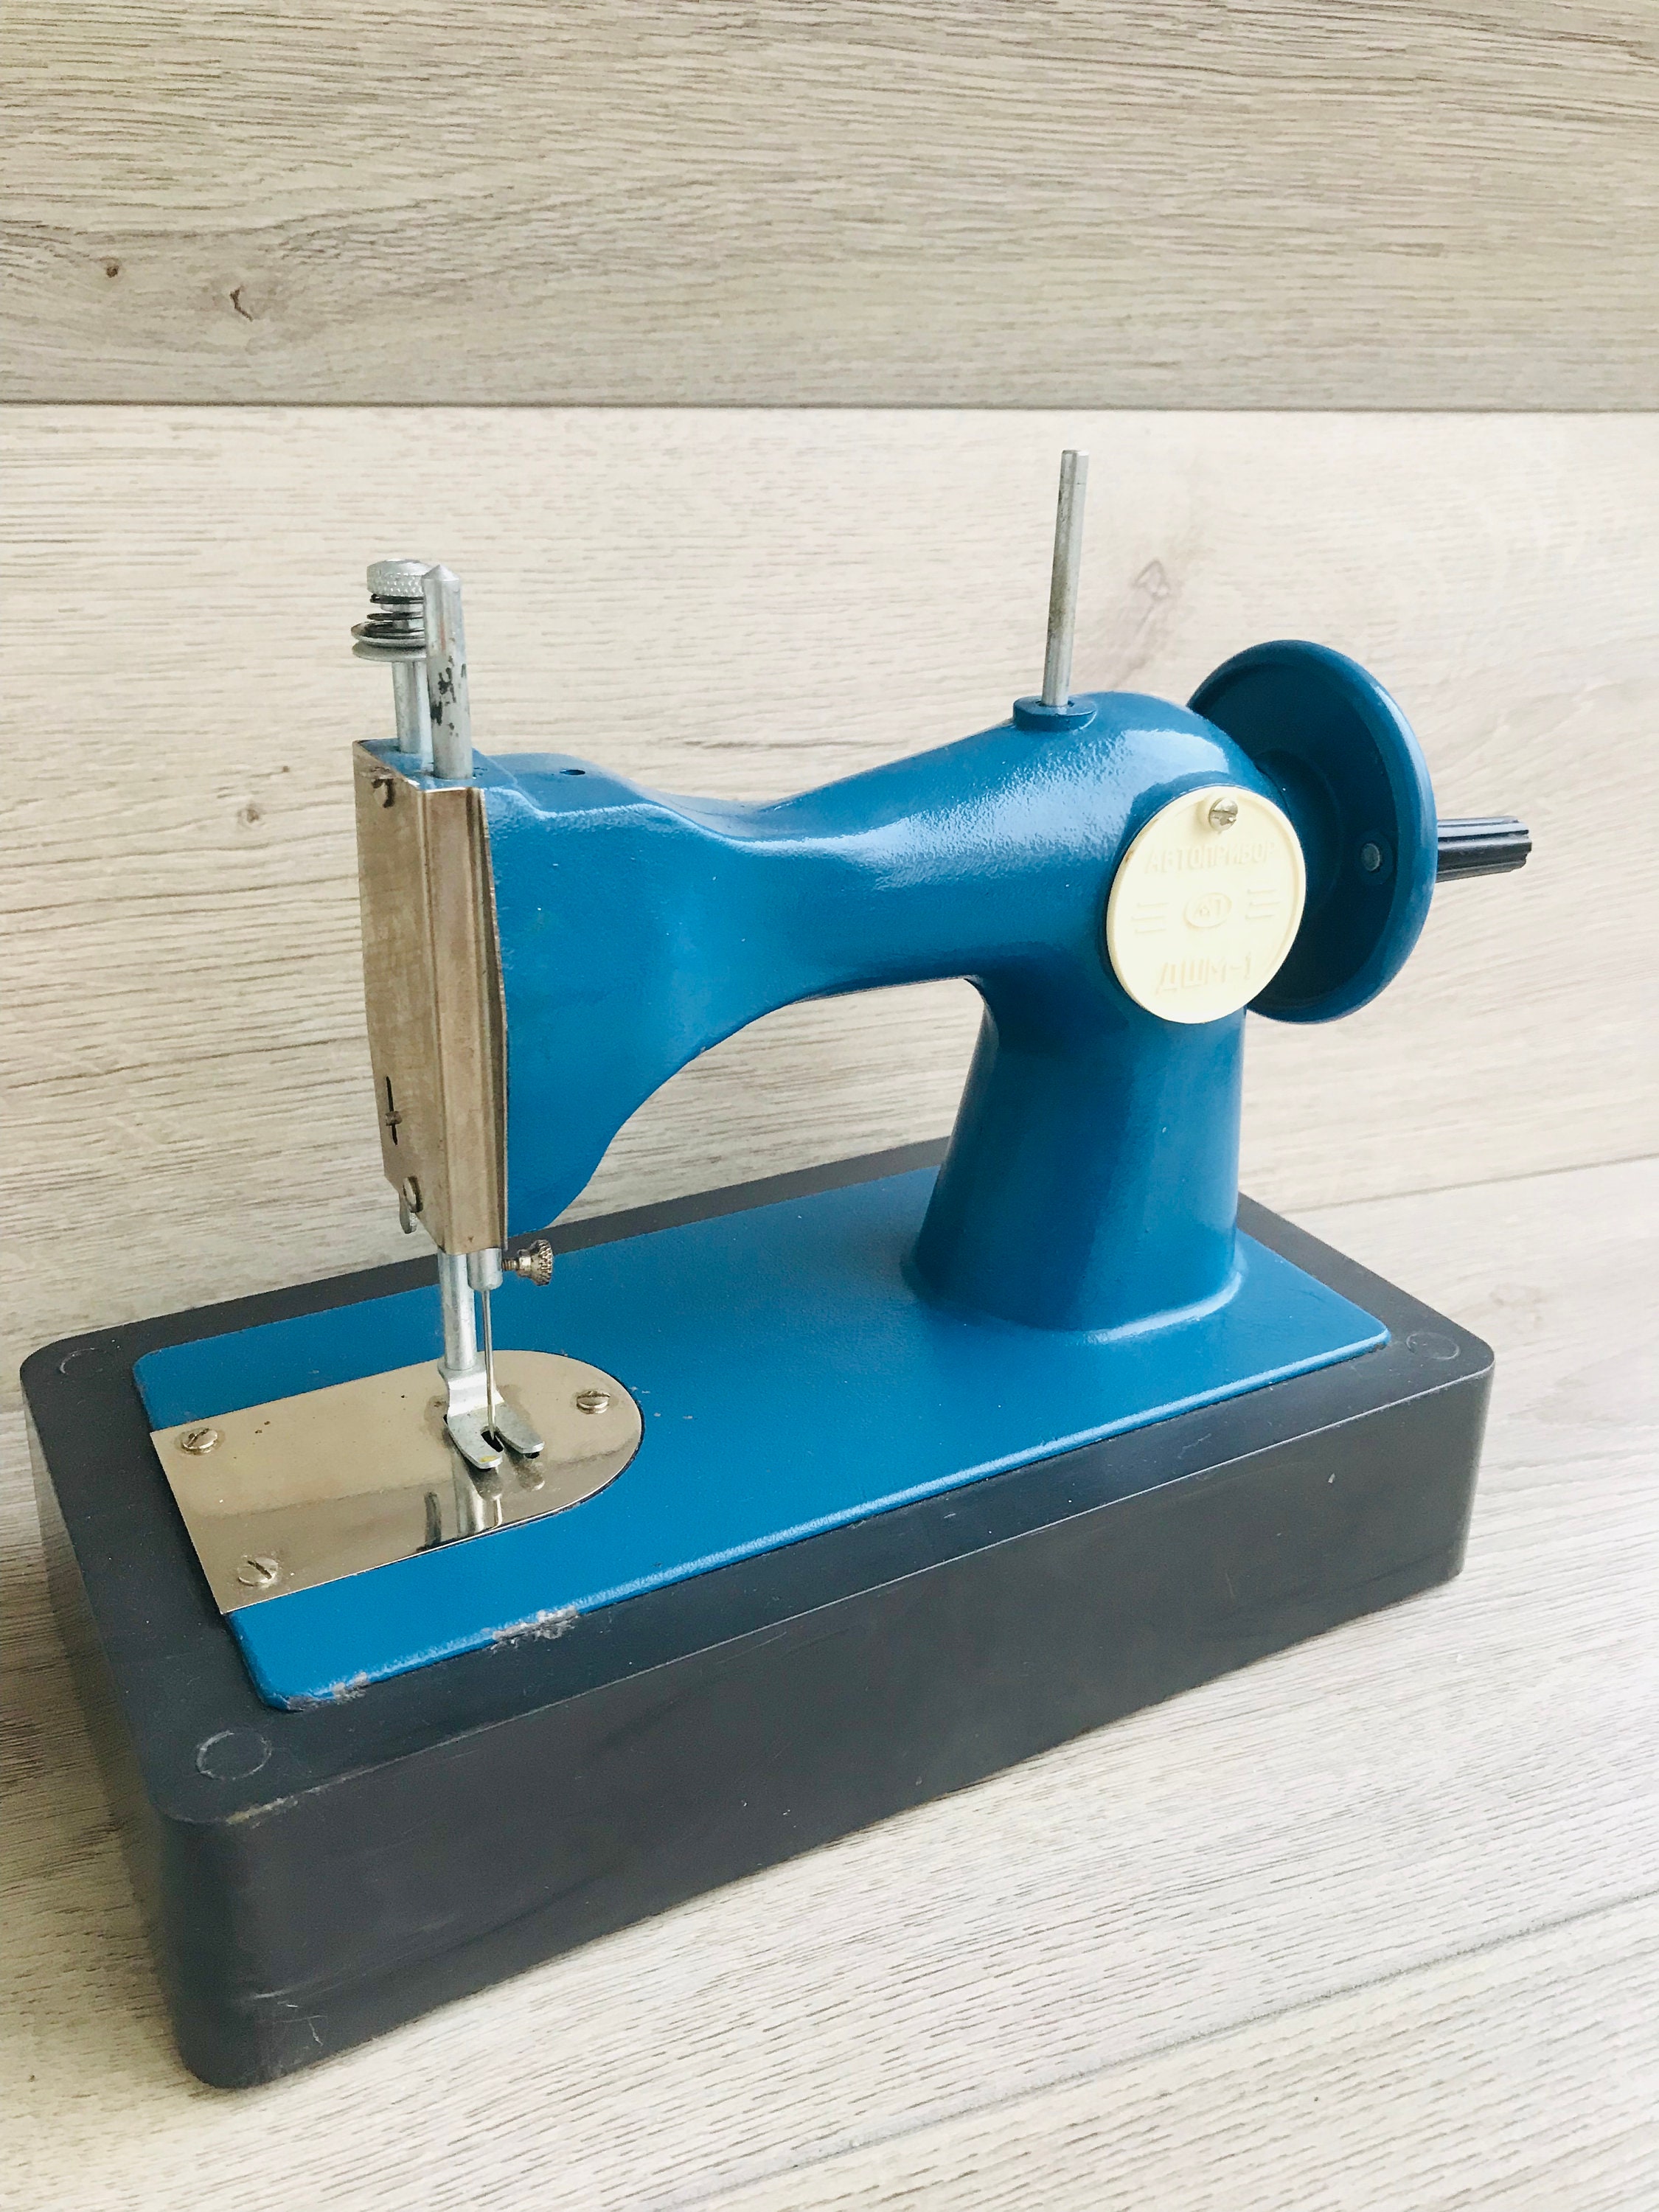 Mini Sewing Machine - arts & crafts - by owner - sale - craigslist